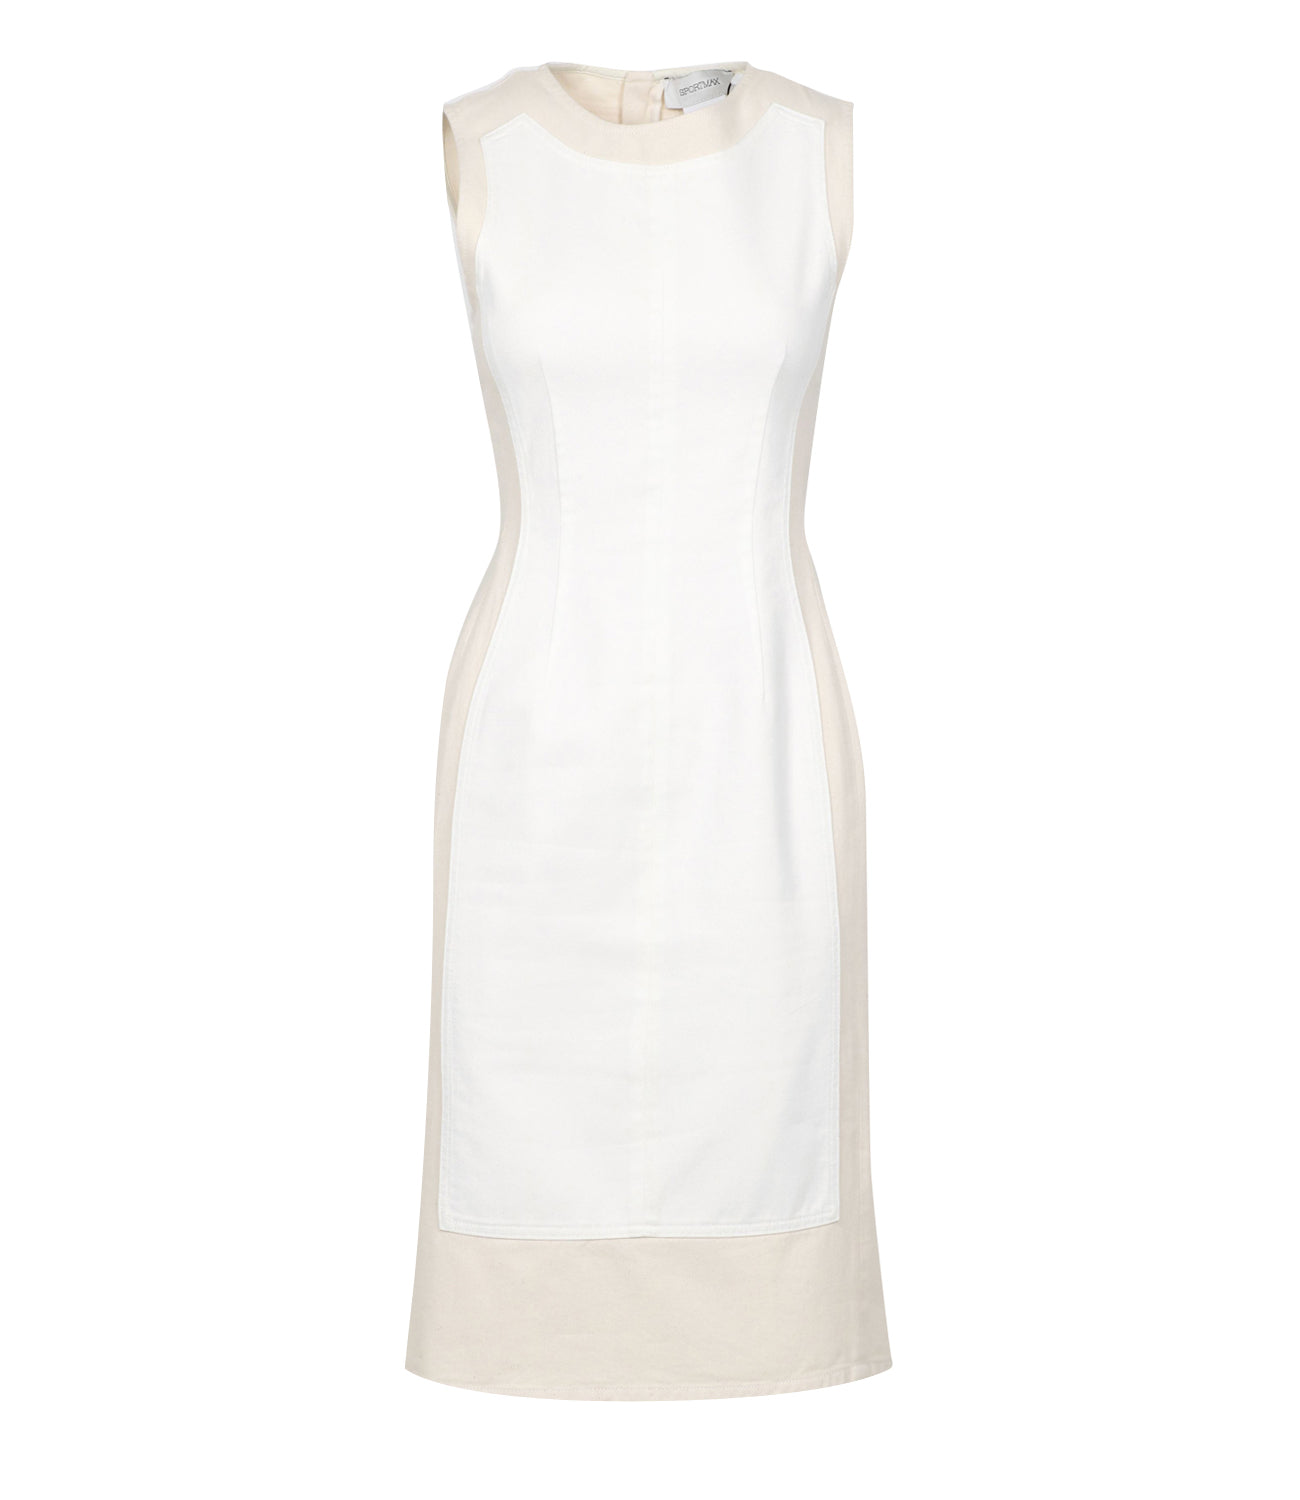 Sportmax | White and Beige Yang Dress